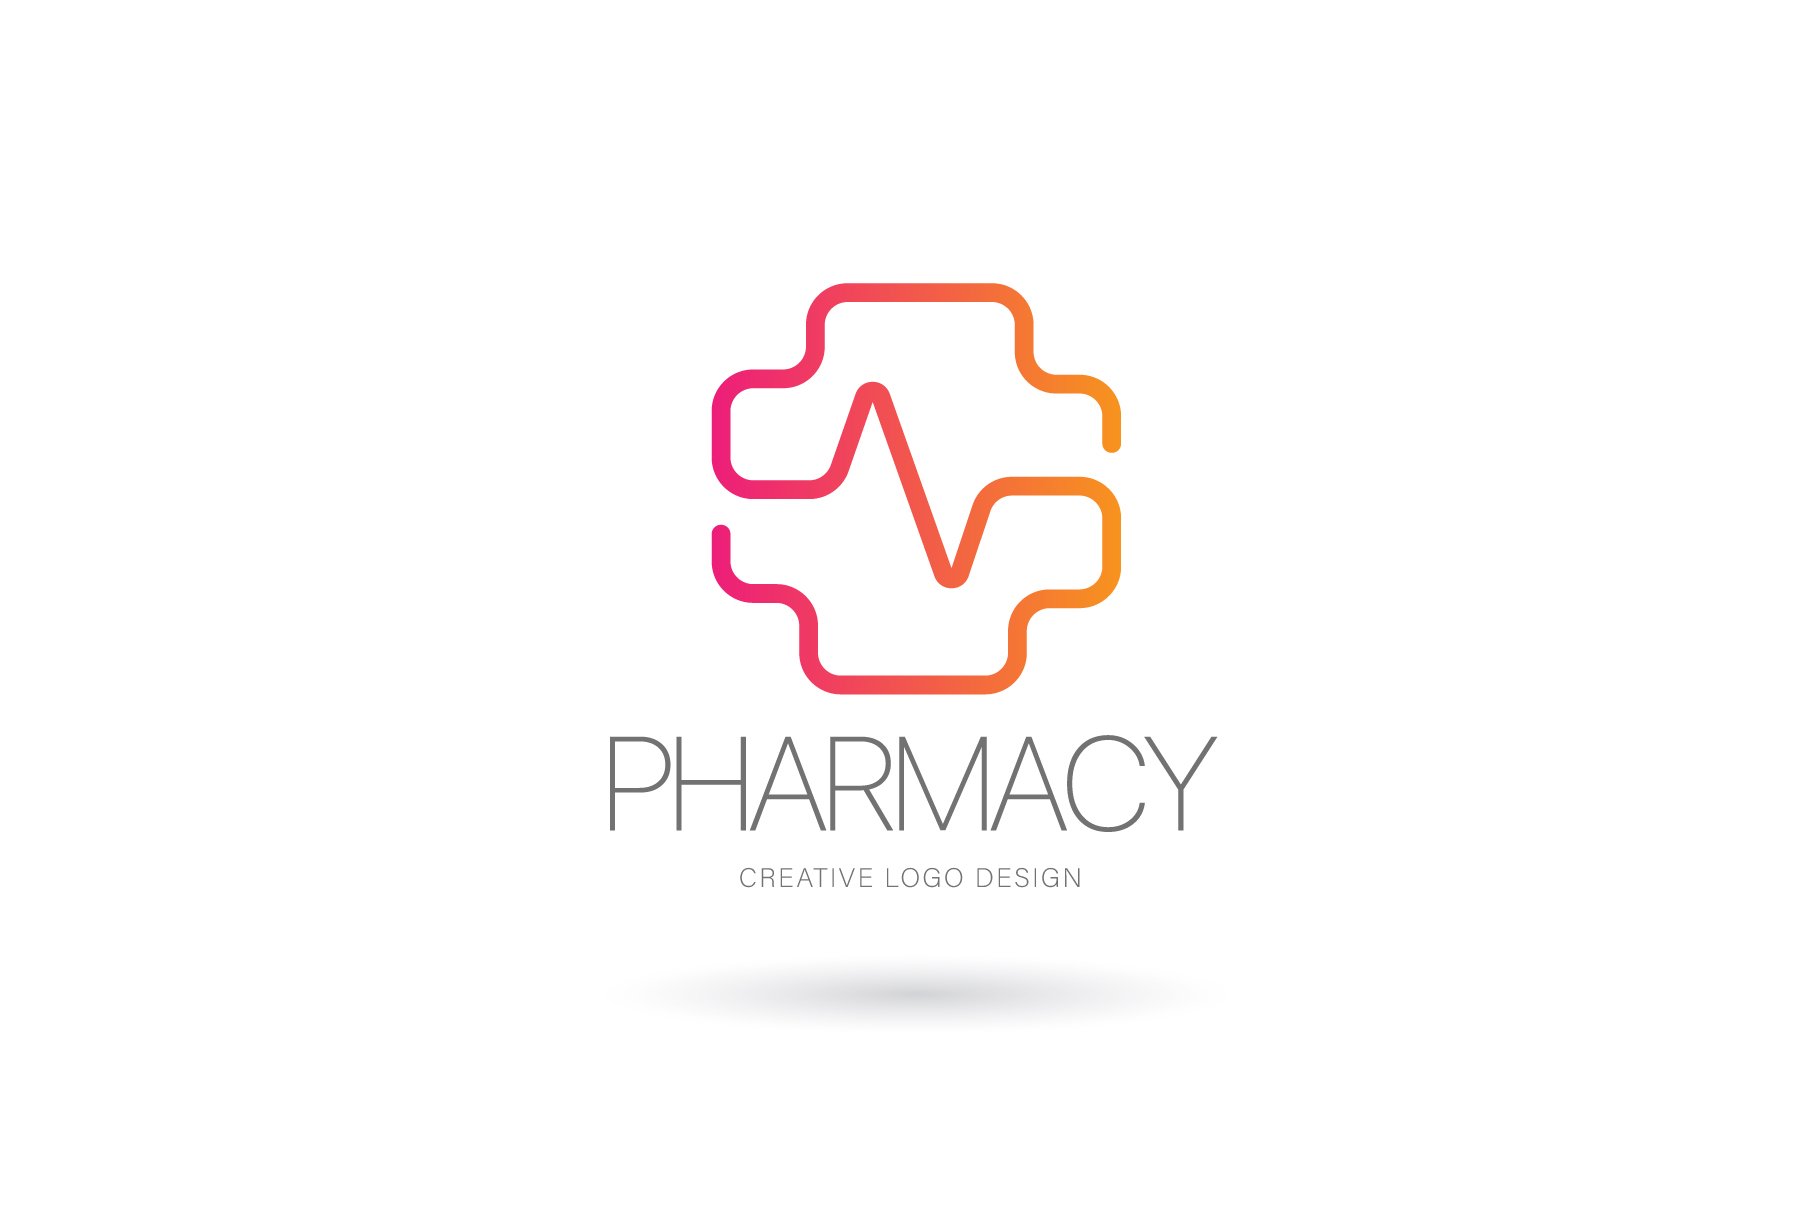 Pharmacy logo, Medical logo cover image.